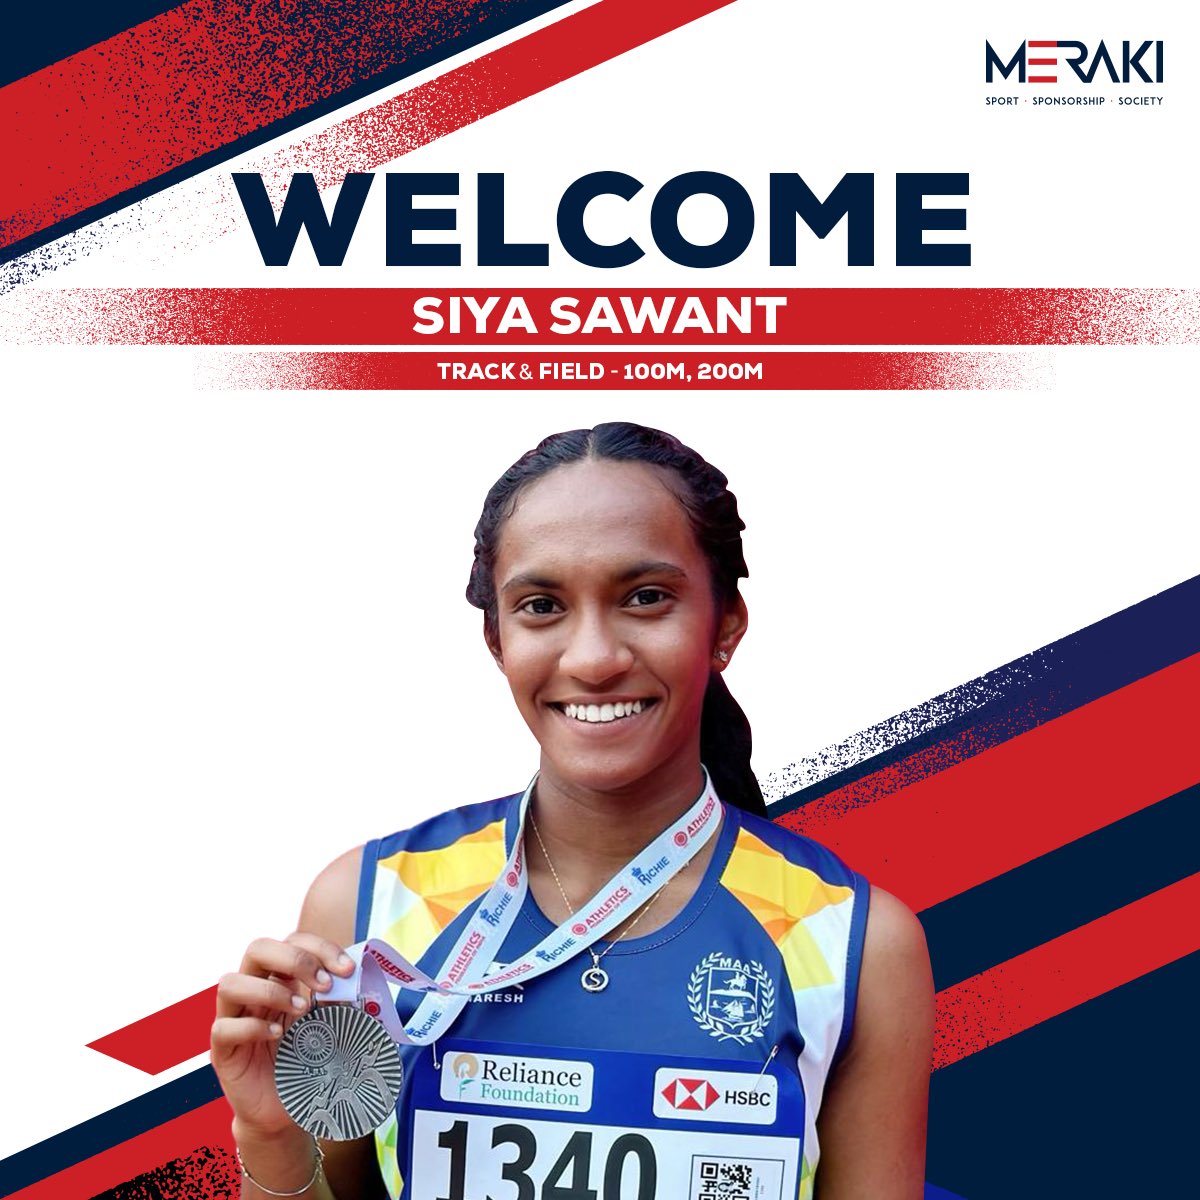 Happy to announce that Siya Sawant, a young and ambitious sprinter, has joined the Meraki Dugout! #MerakiHero